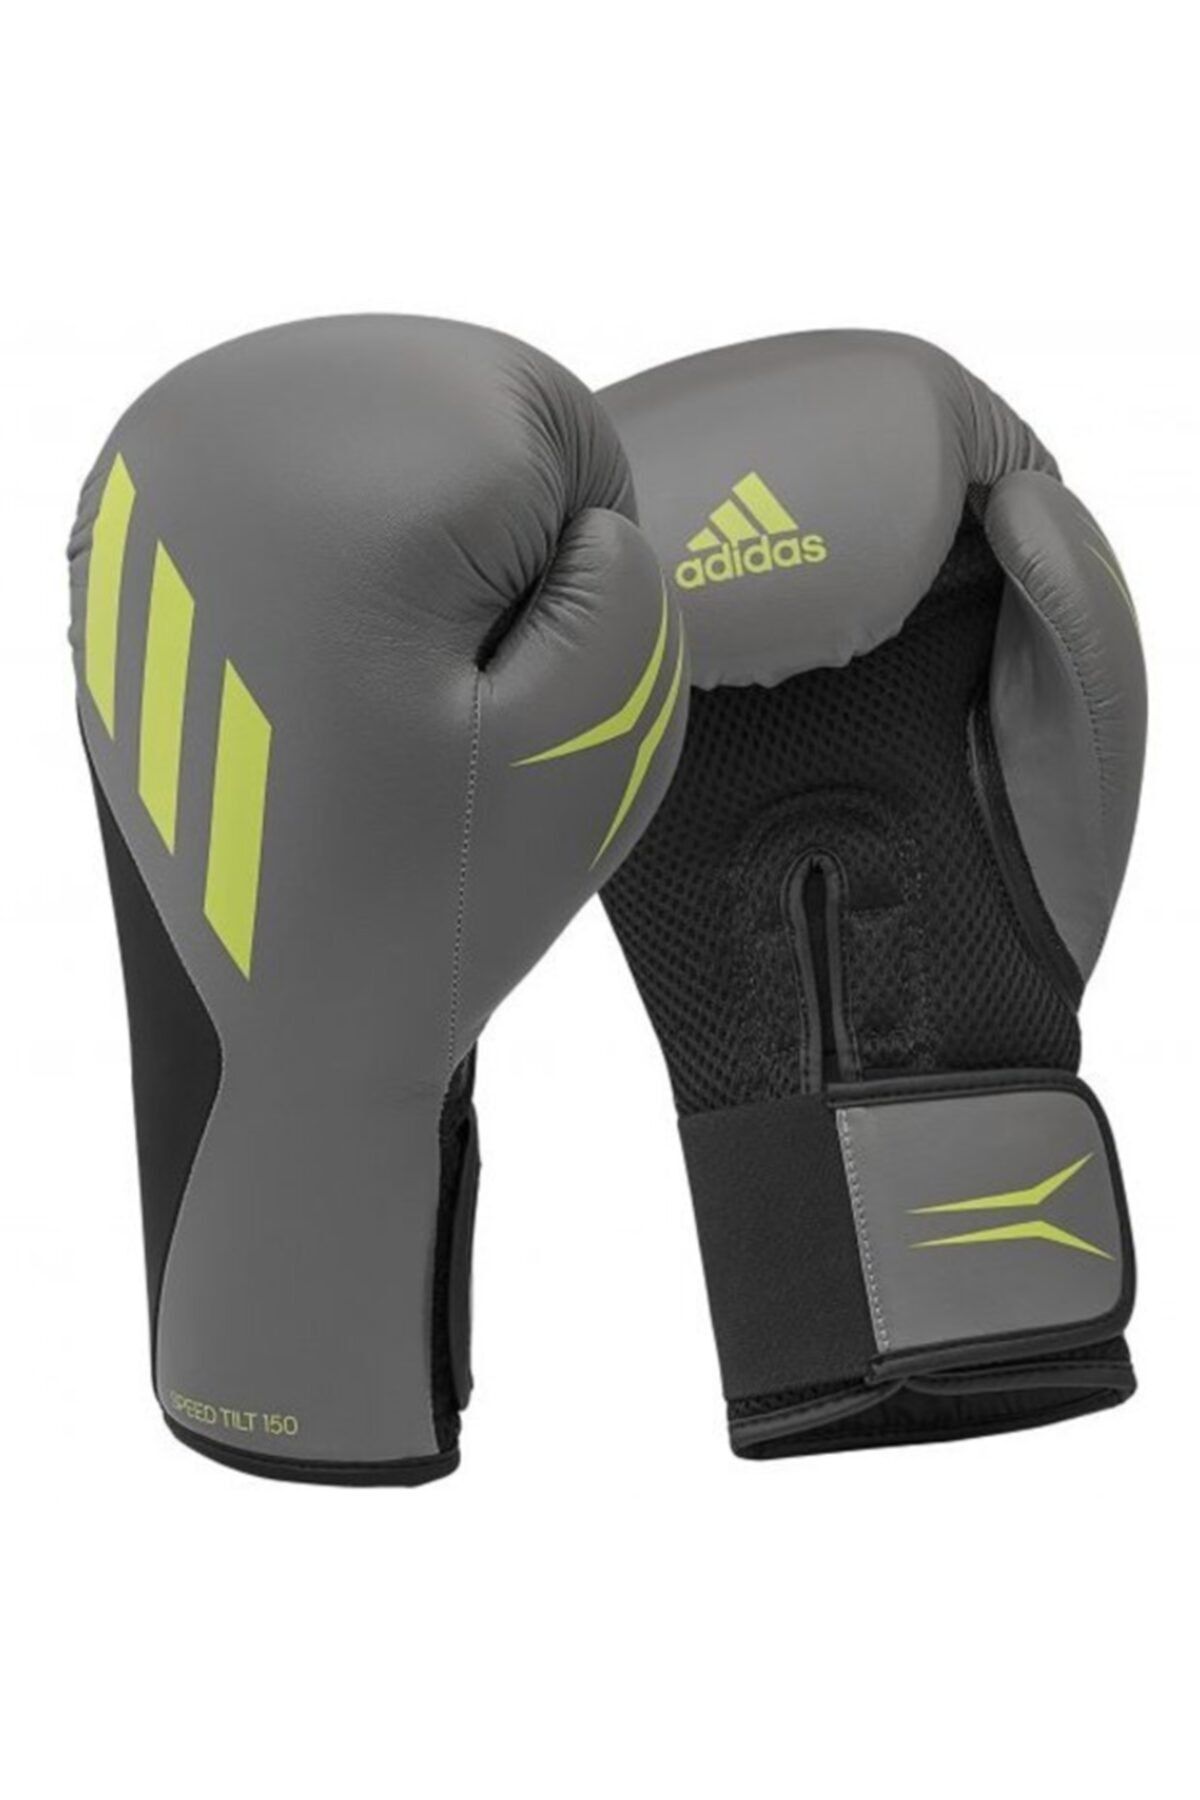 adidas Gri Spd150tg Speed Tilt150 Boks Eldiveni Boxing Gloves Deri